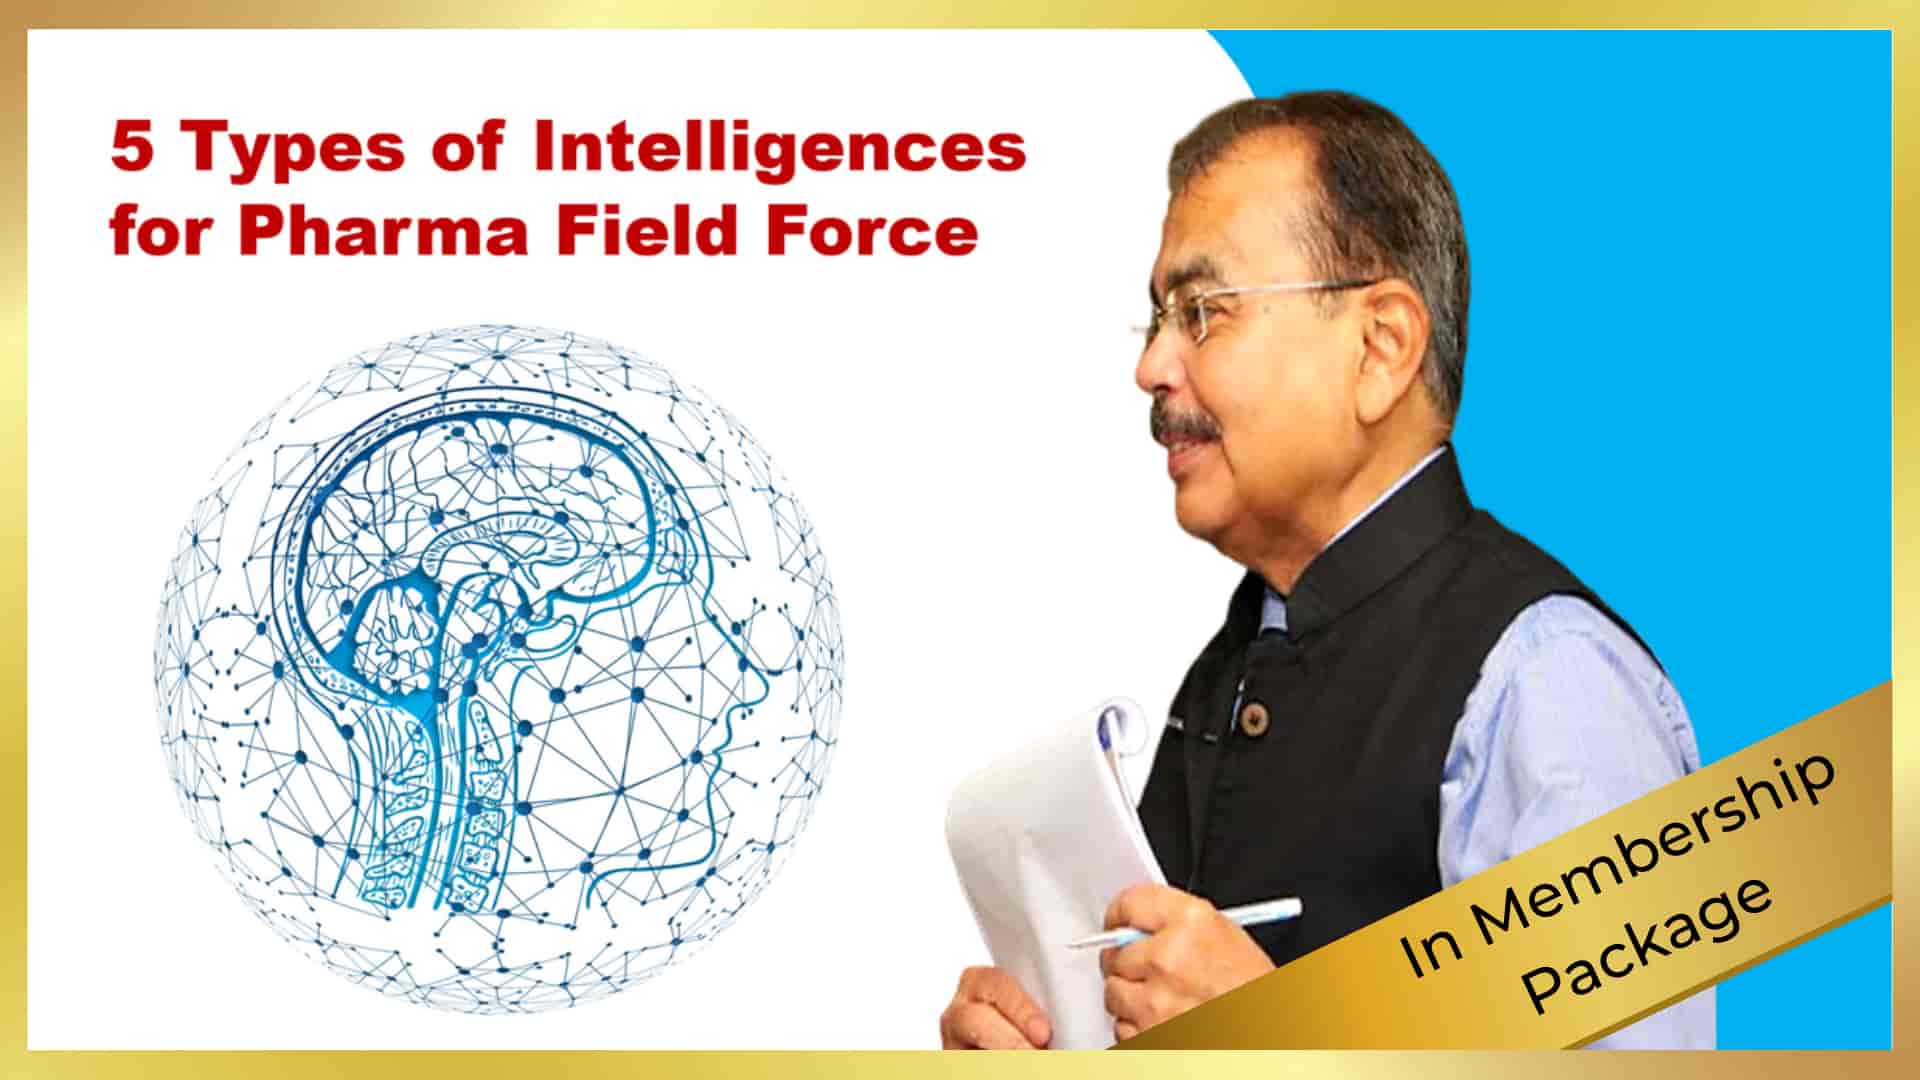 5 Types of Intelligences for Pharma Field Force by Vivek Hattangadi